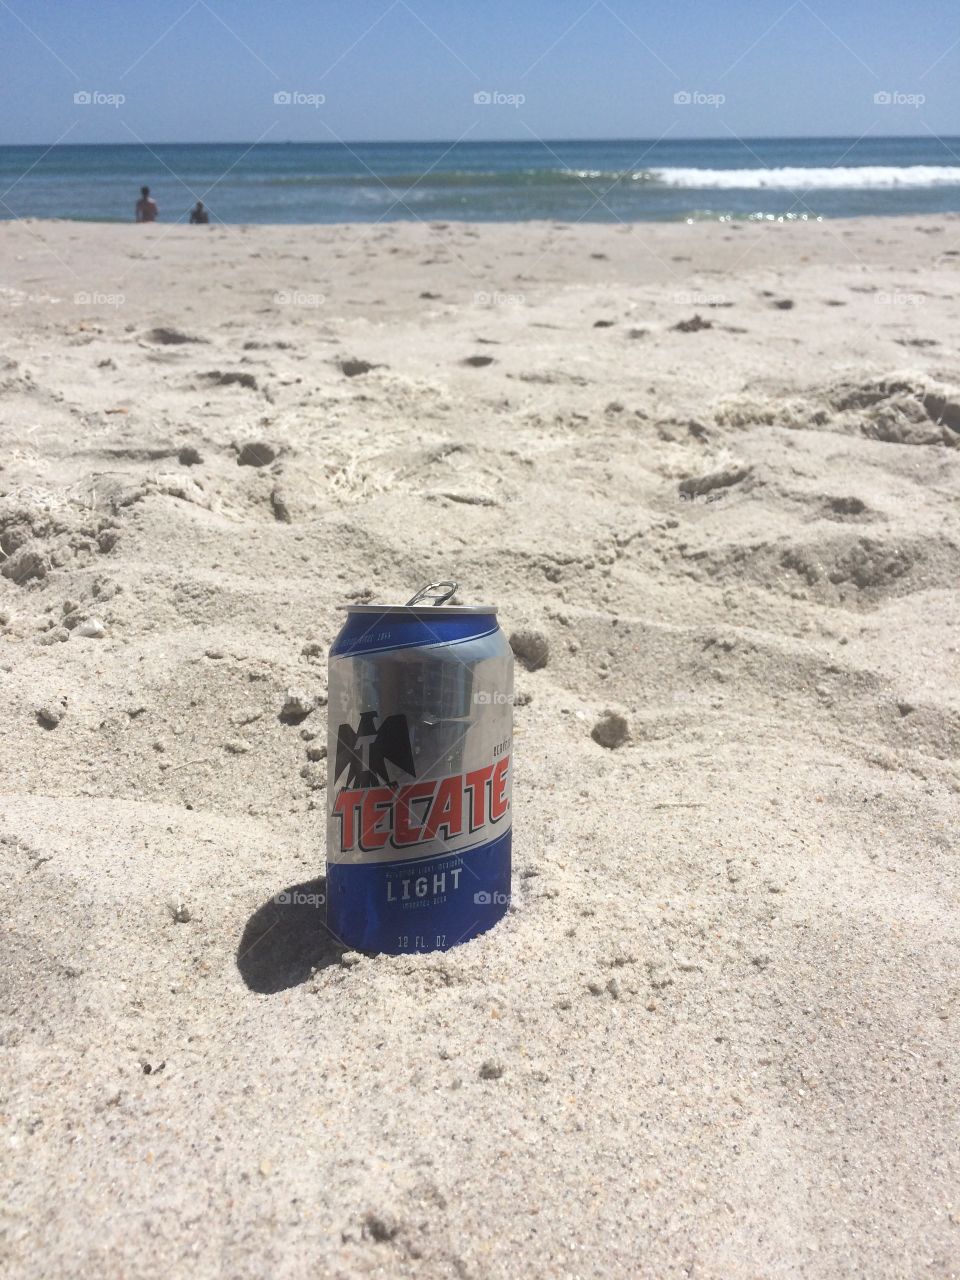 Beach life
Florida 